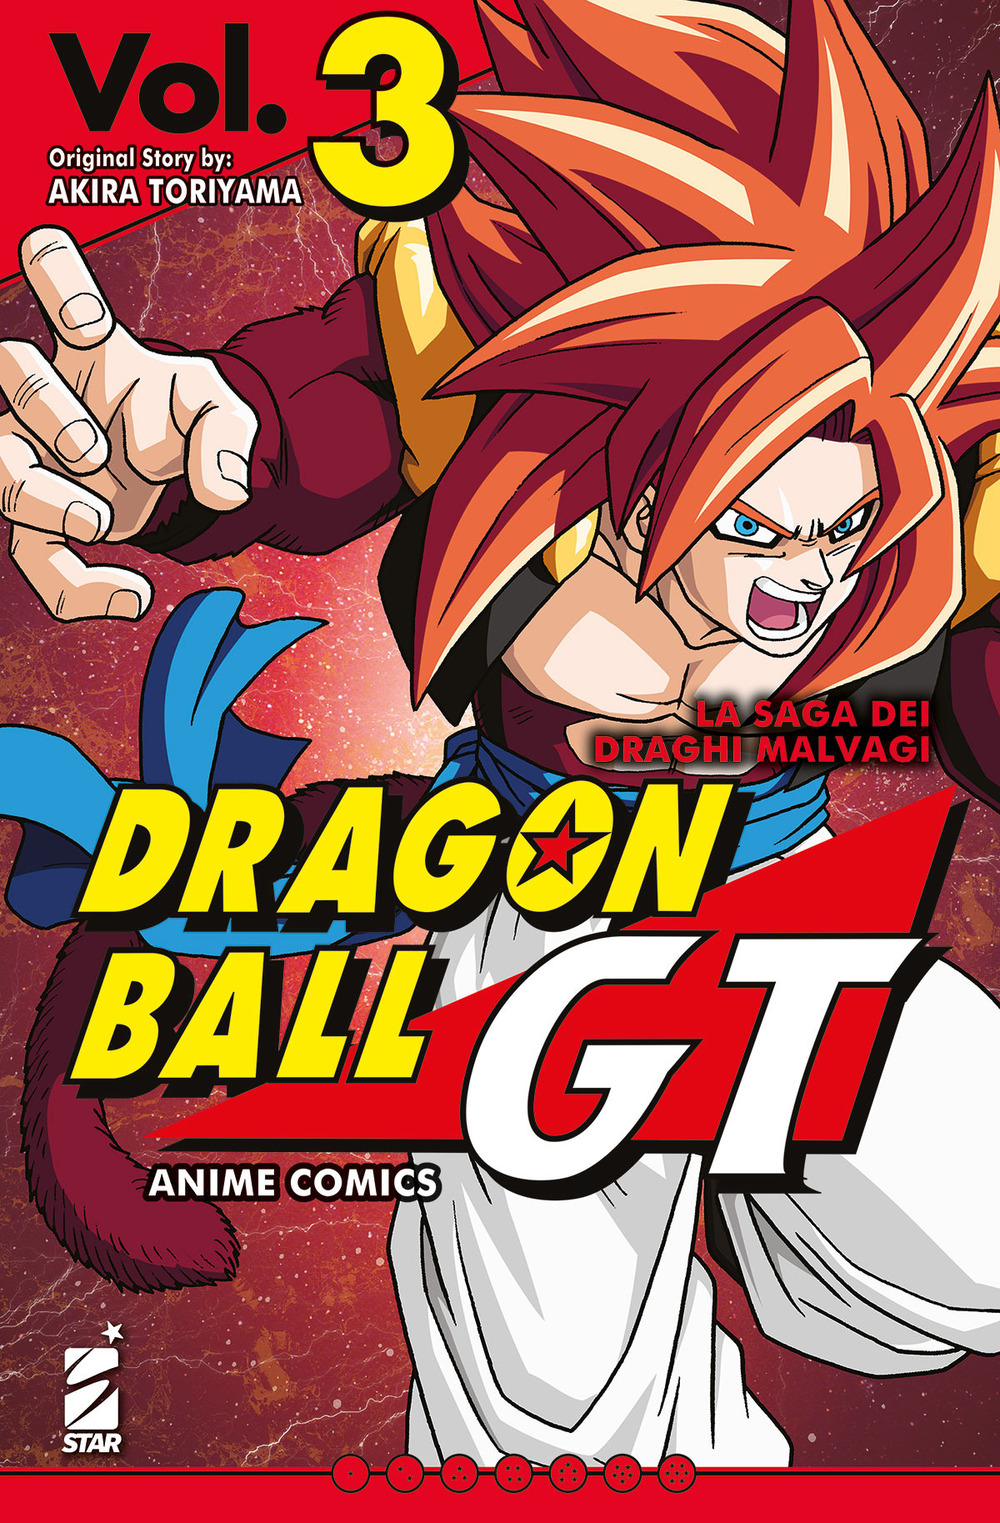 La saga dei draghi malvagi. Dragon Ball GT. Anime comics. Vol. 3